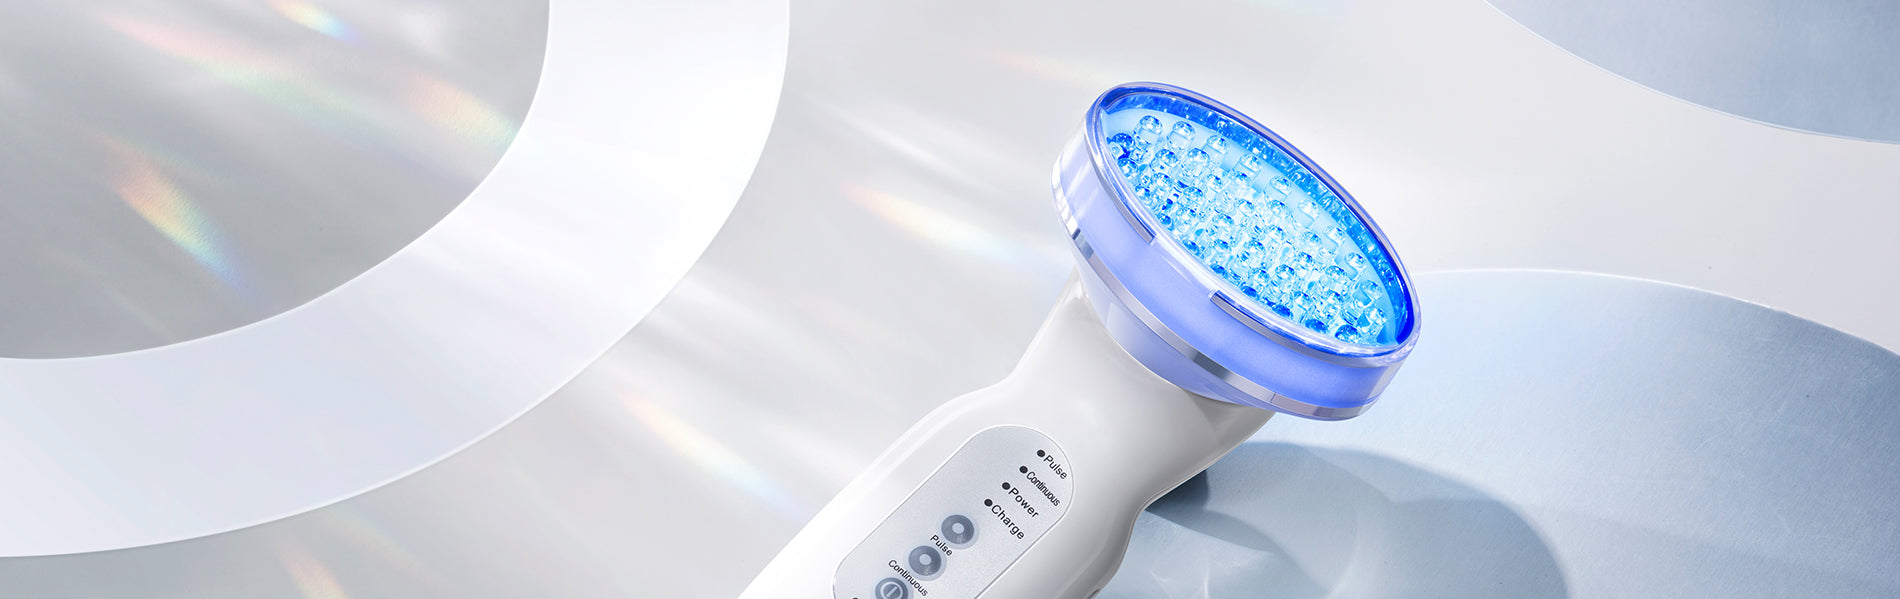 Basic Guide for Your LED light Skin Care Journey